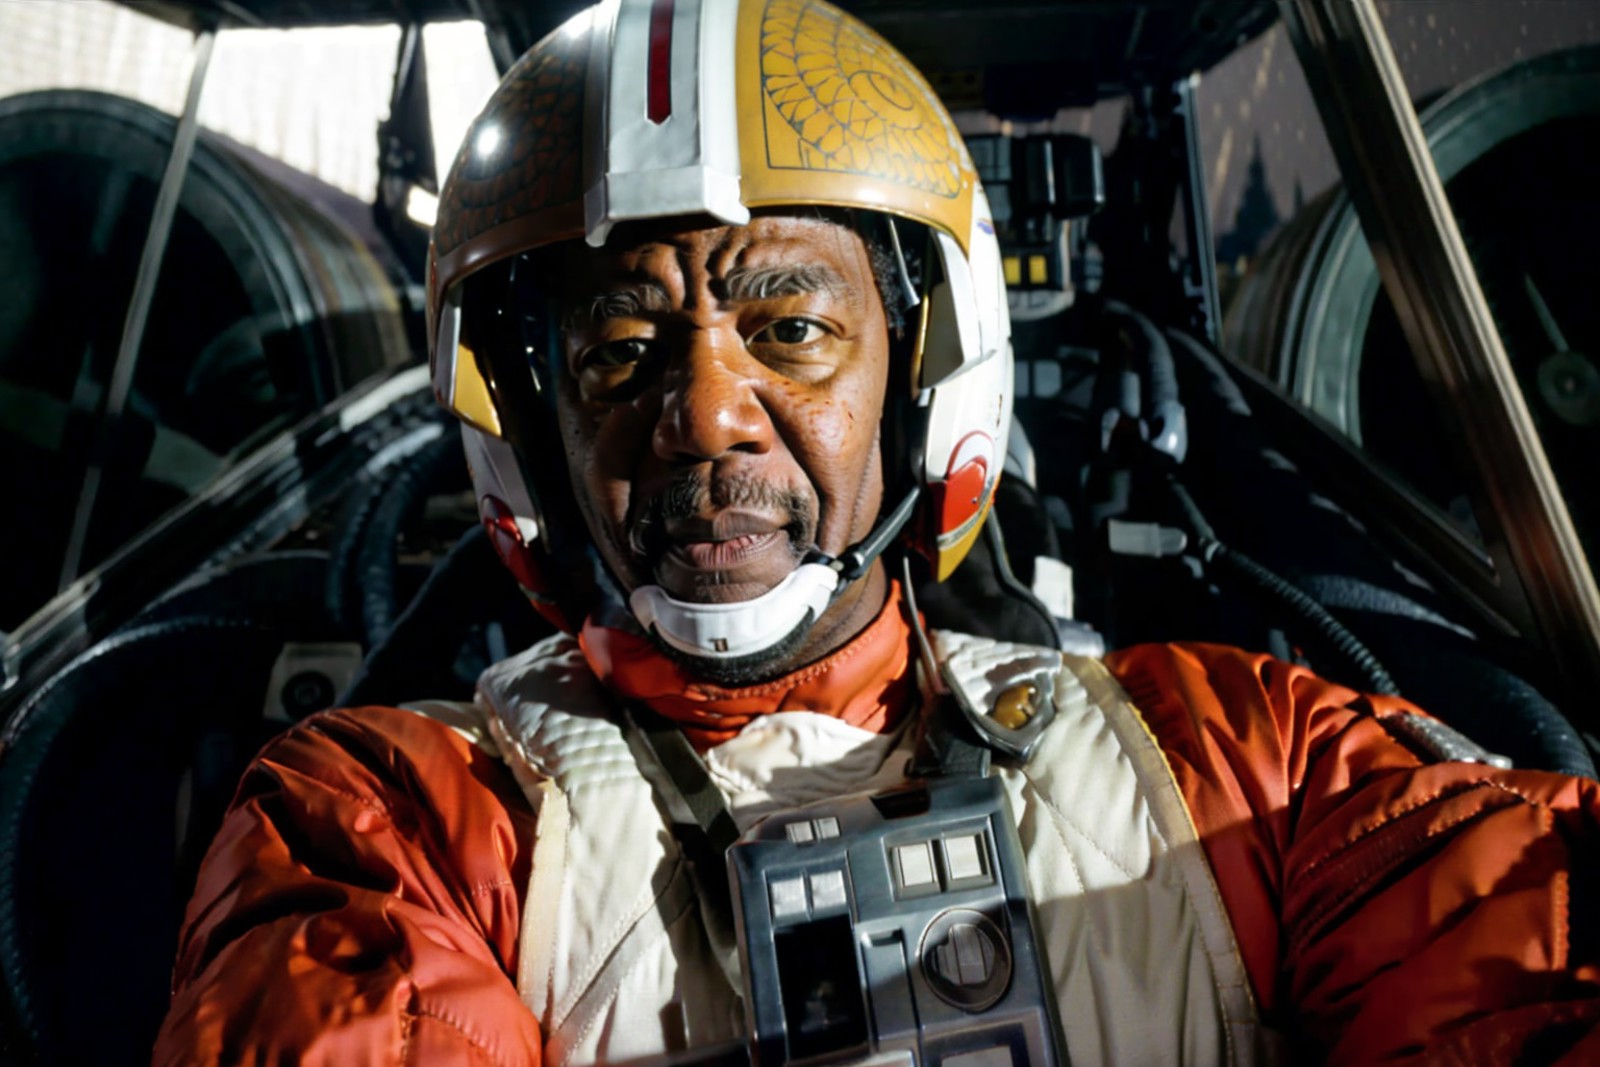 cockpit view,,morgan freeman in rebel pilot suit,helmet,googles,concentrating<lora:RPSV3:0.8>